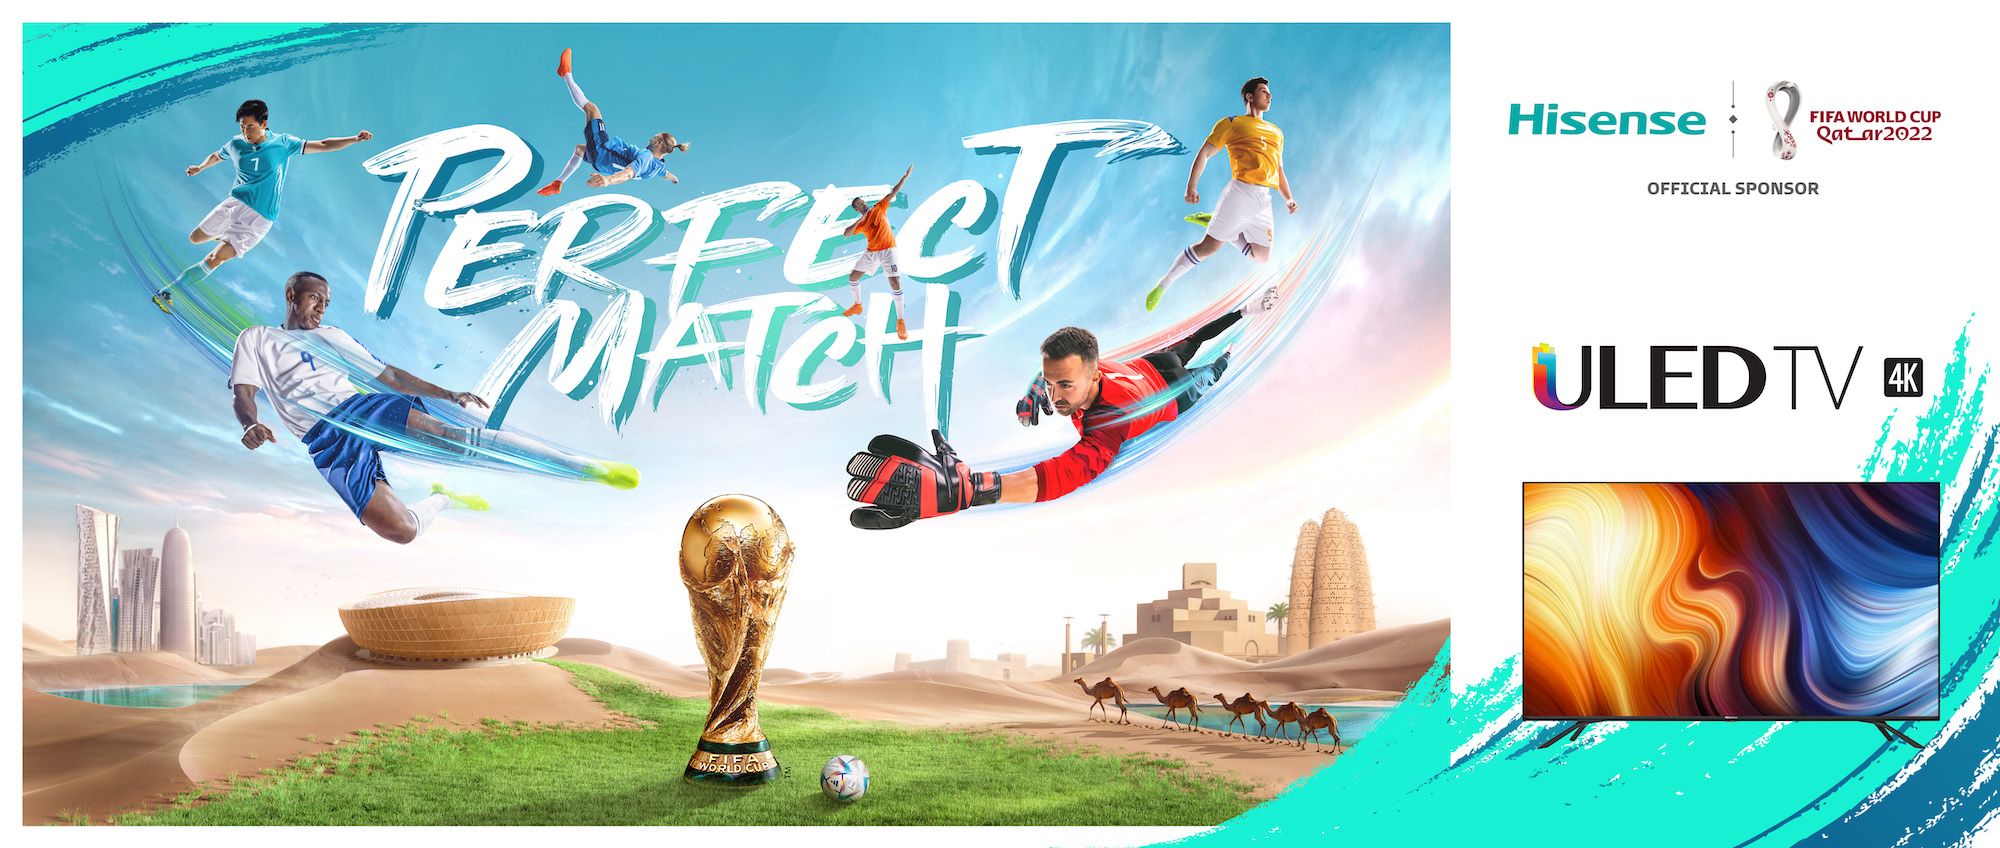 Hisense TV Ranks 2nd Globally, Sponsors Fifa World Cup Qatar 2022